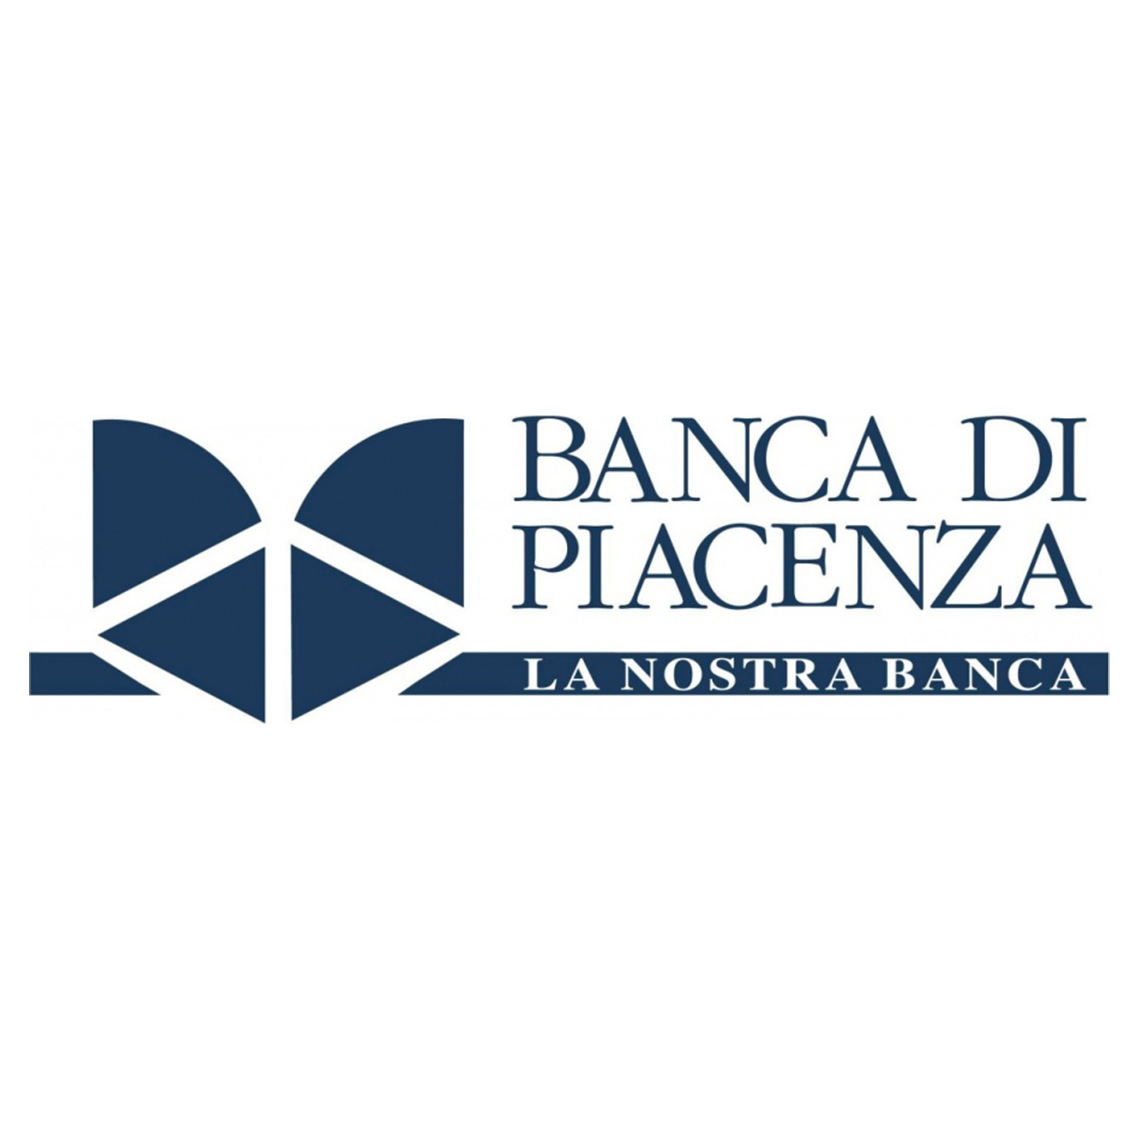 Banca di Piacenza